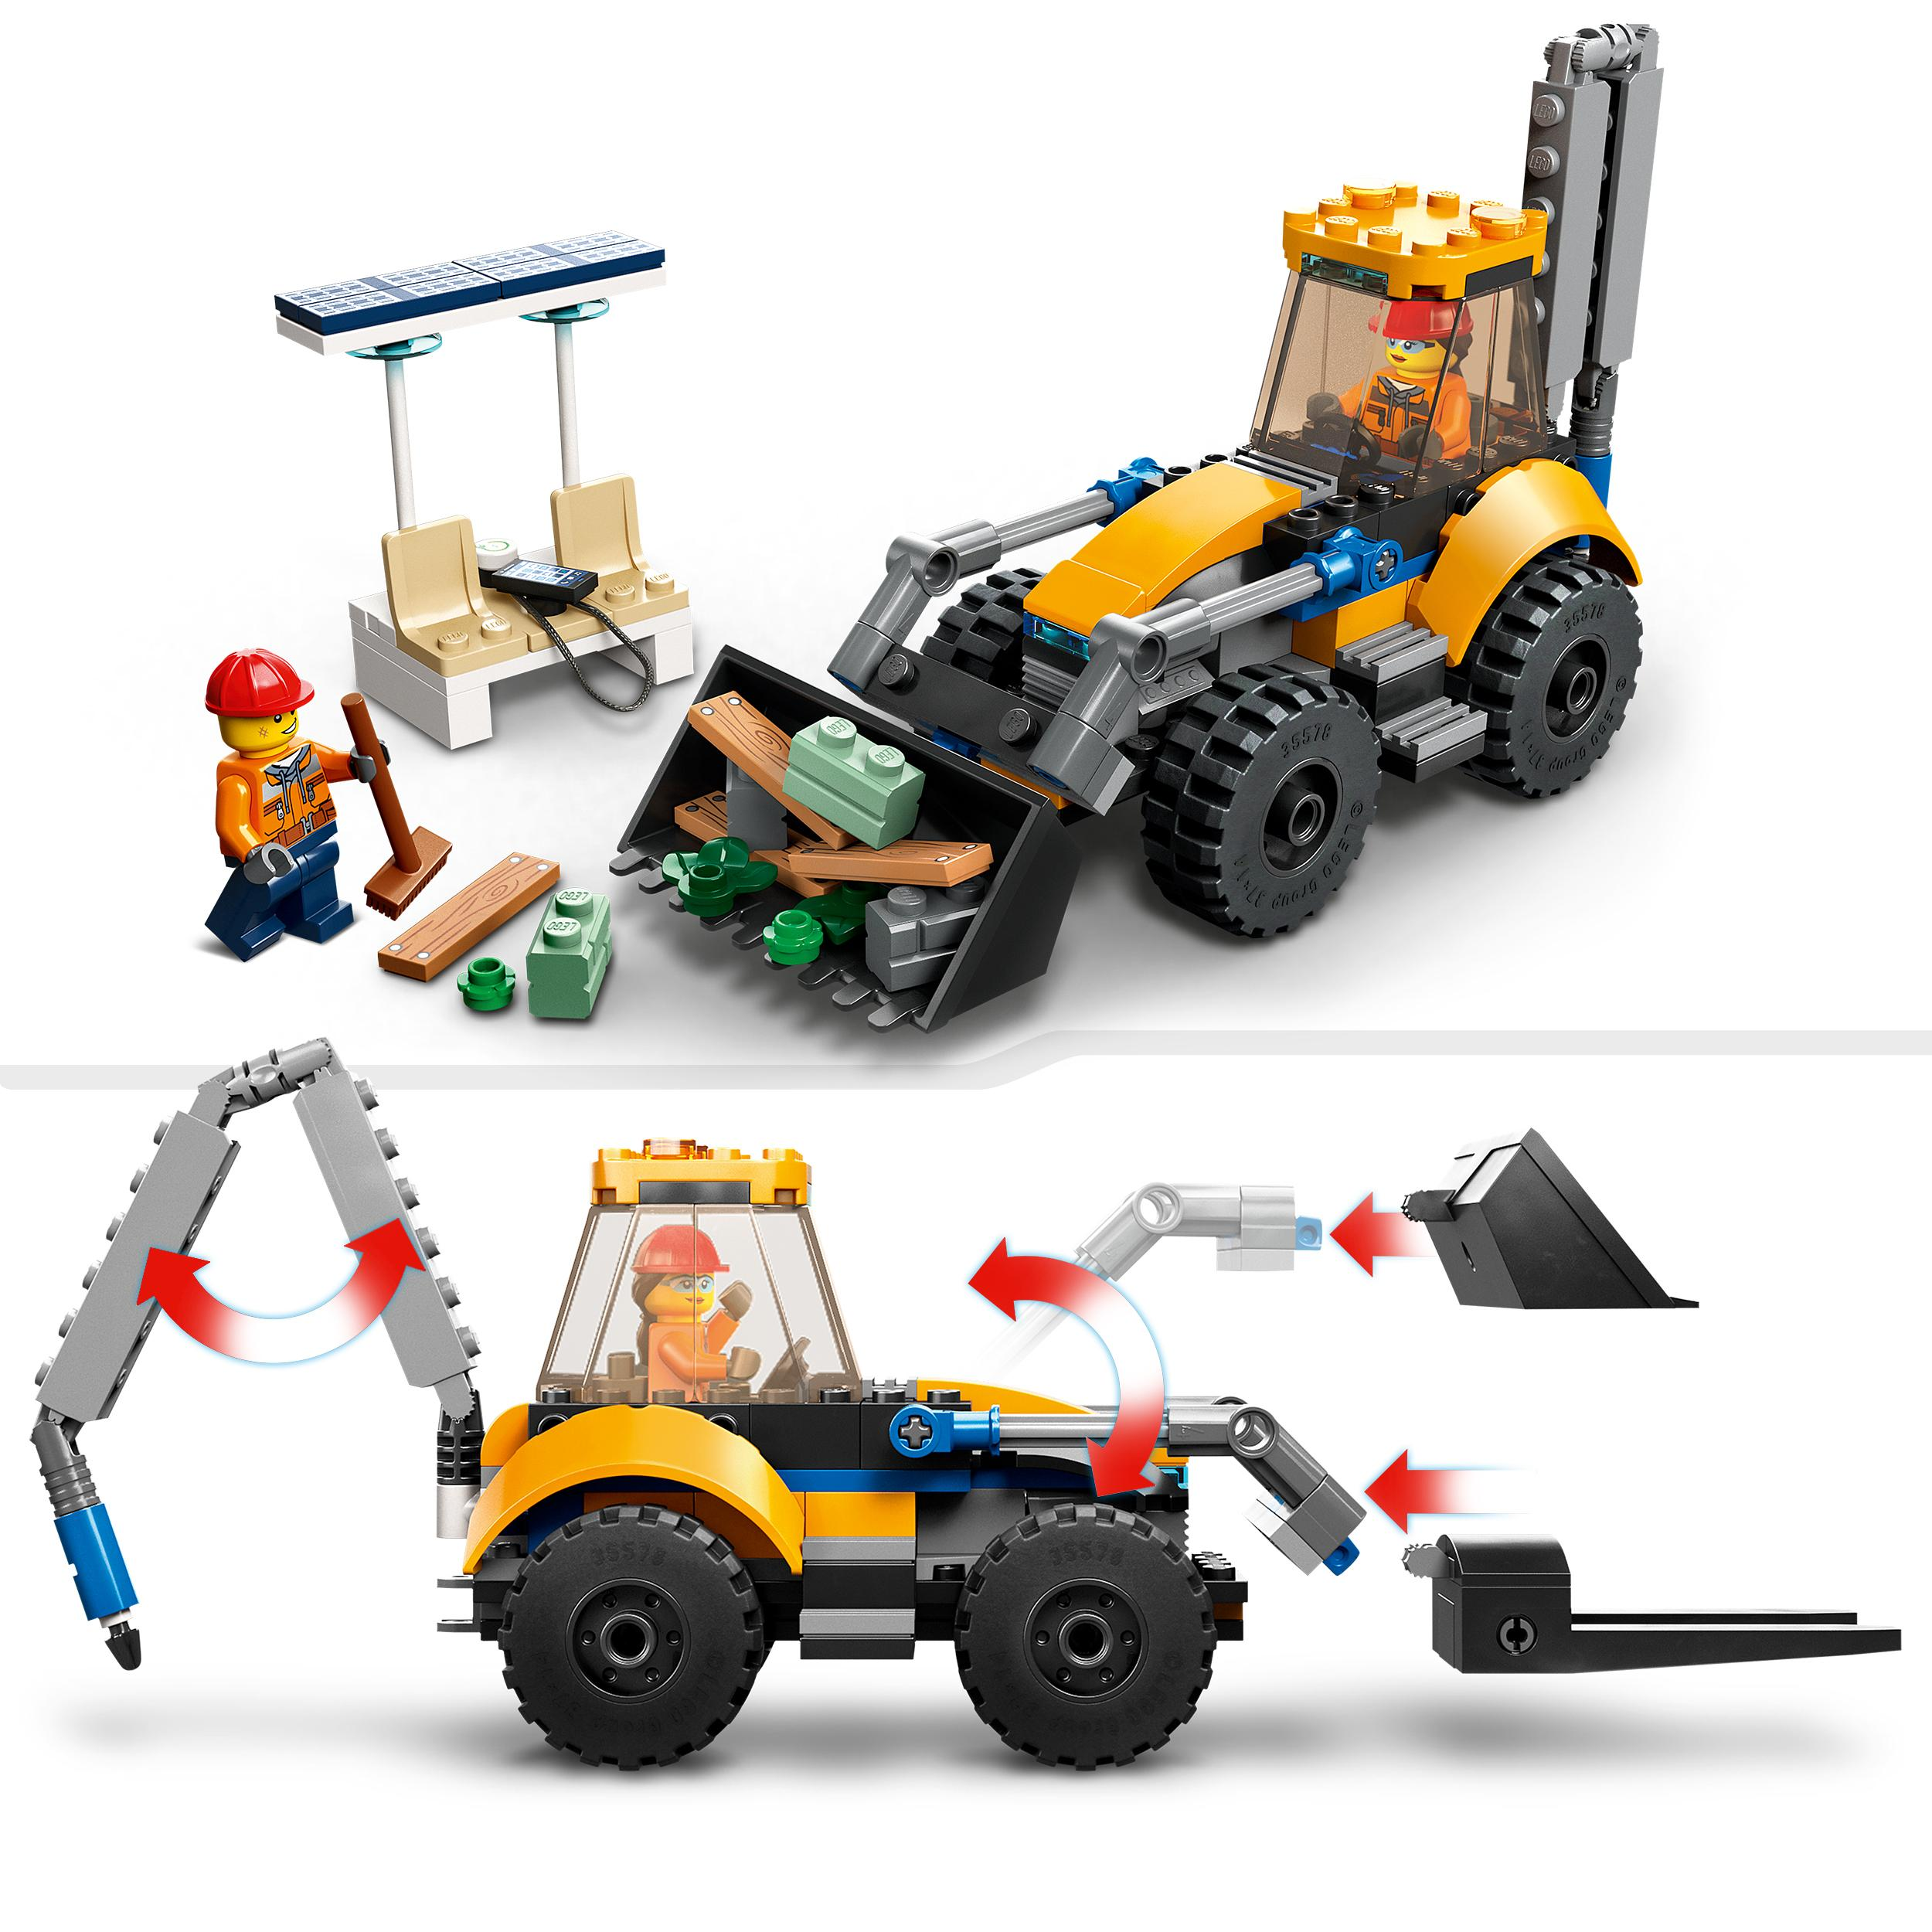 LEGO City 60385 Radlader Bausatz, Mehrfarbig